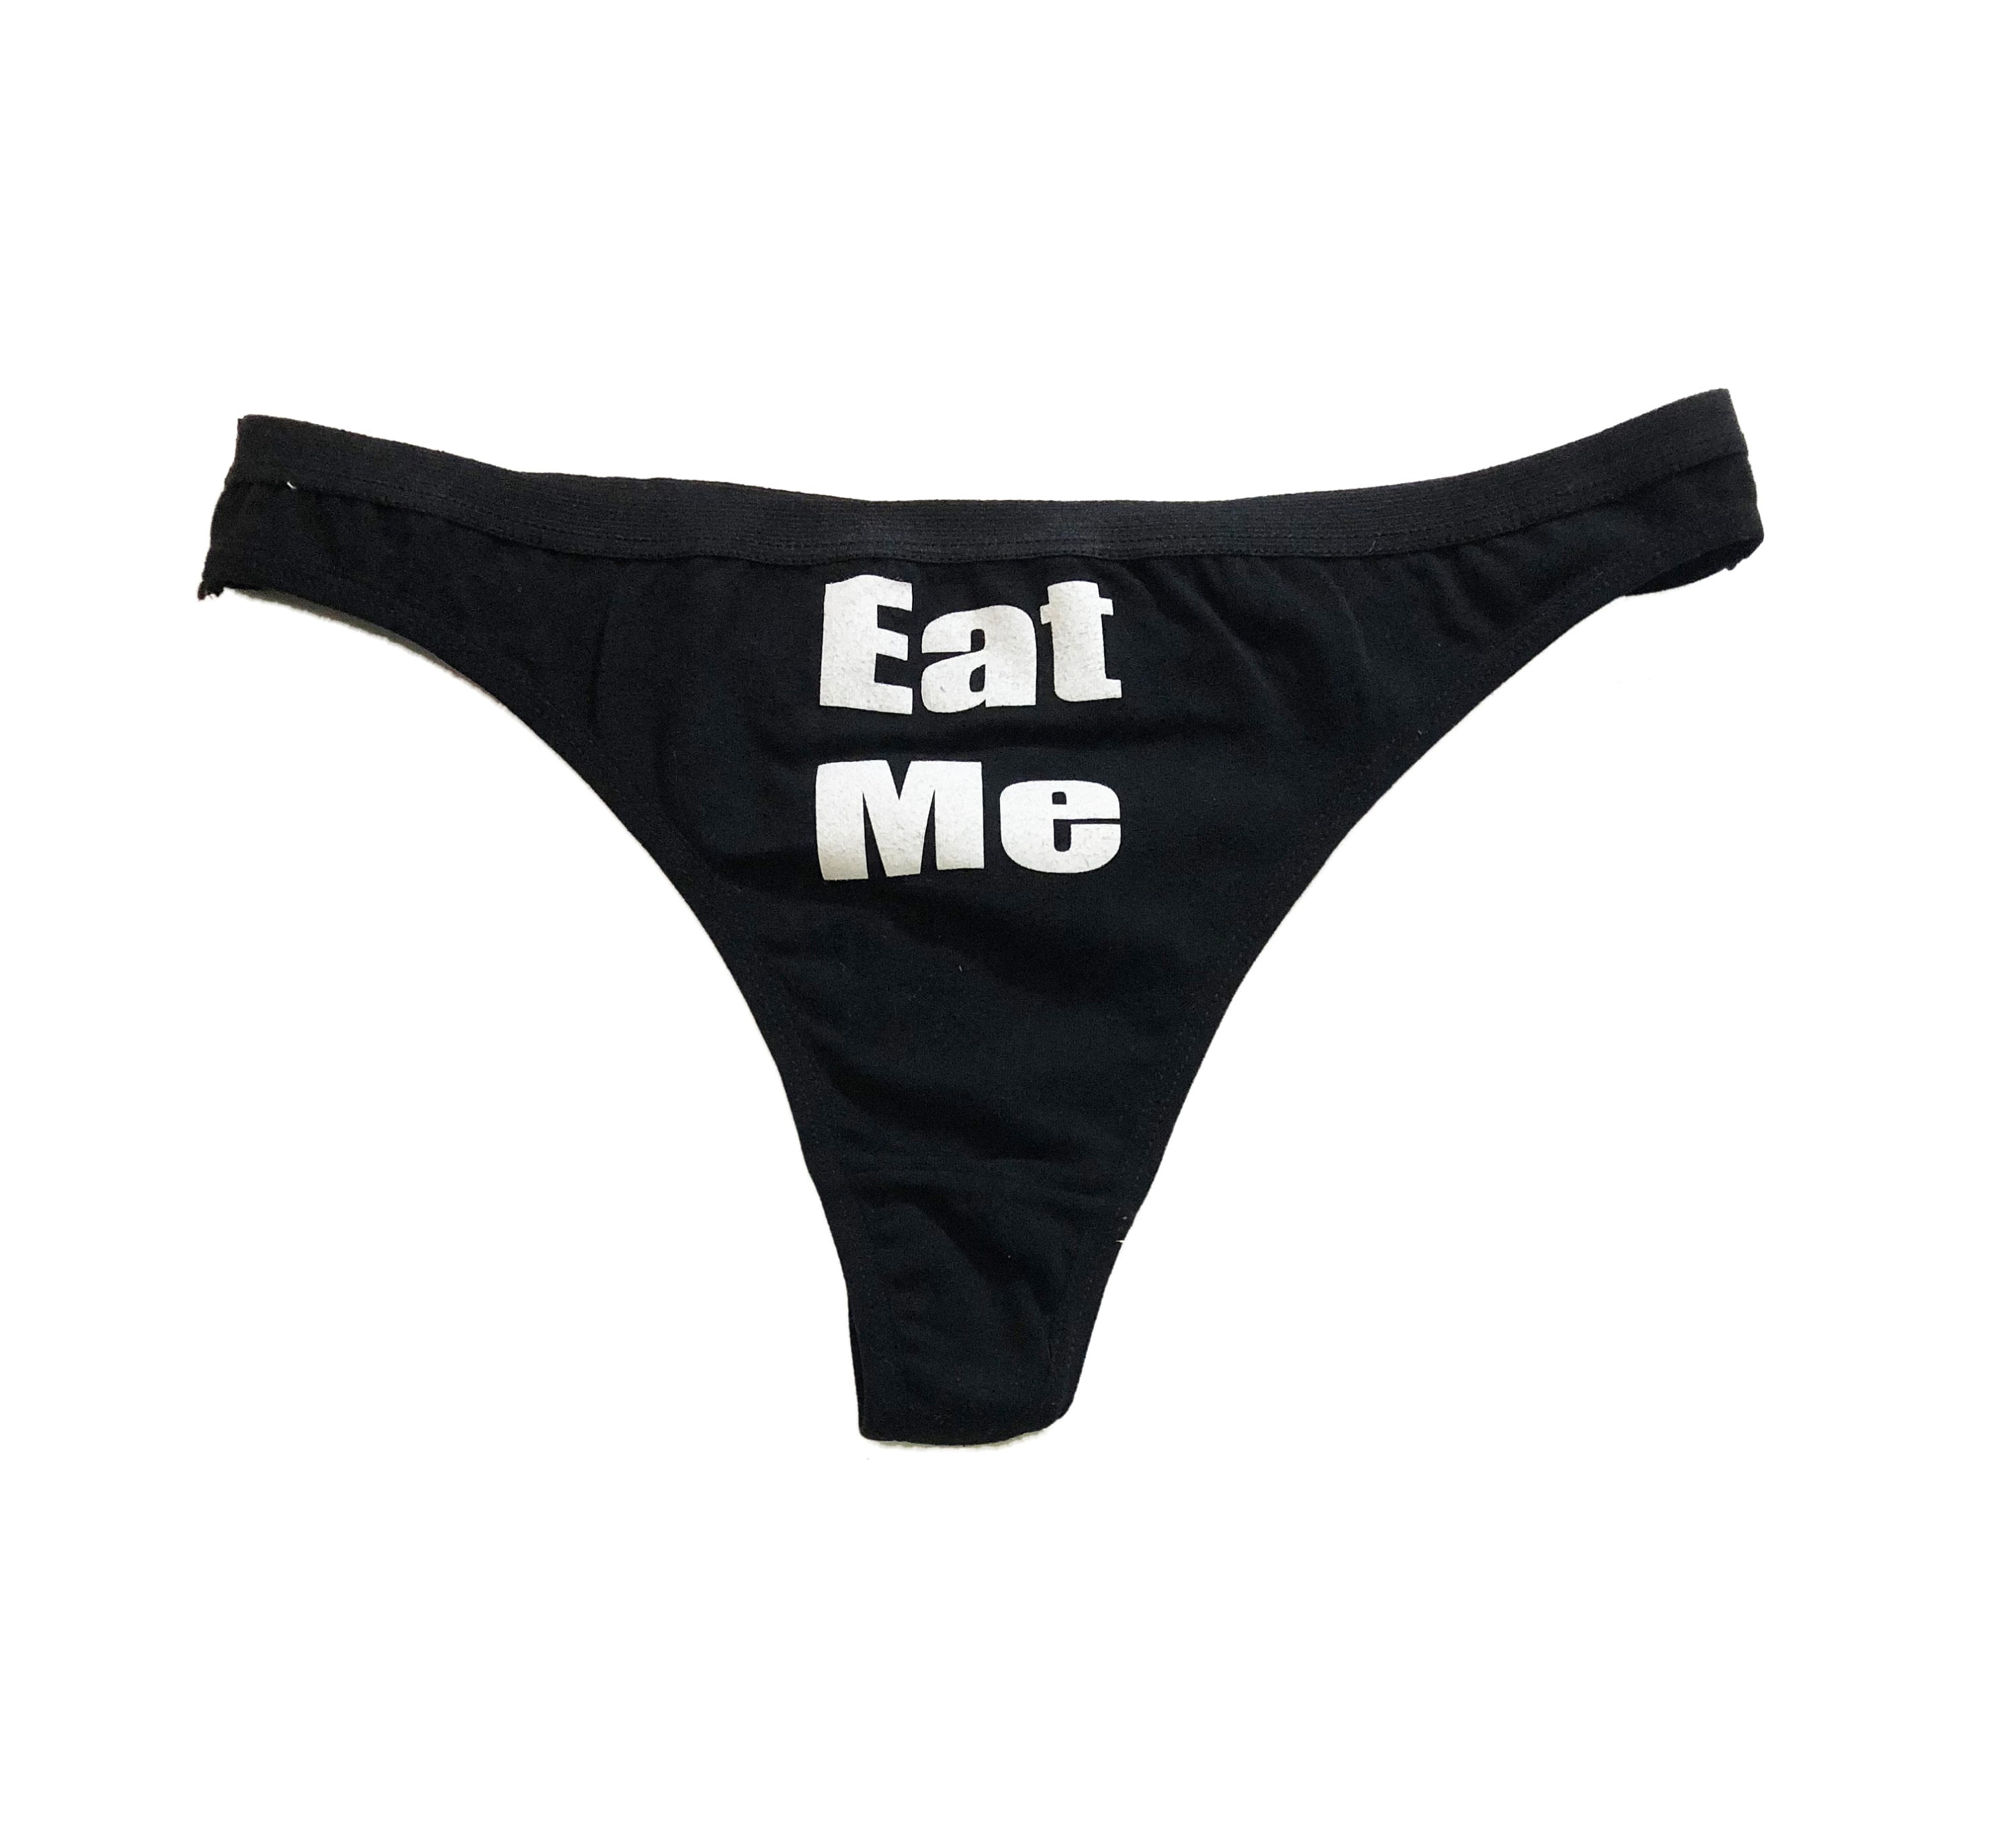 Eat Me" Cotton Blend Thong Panty: A Bold Statement Piece